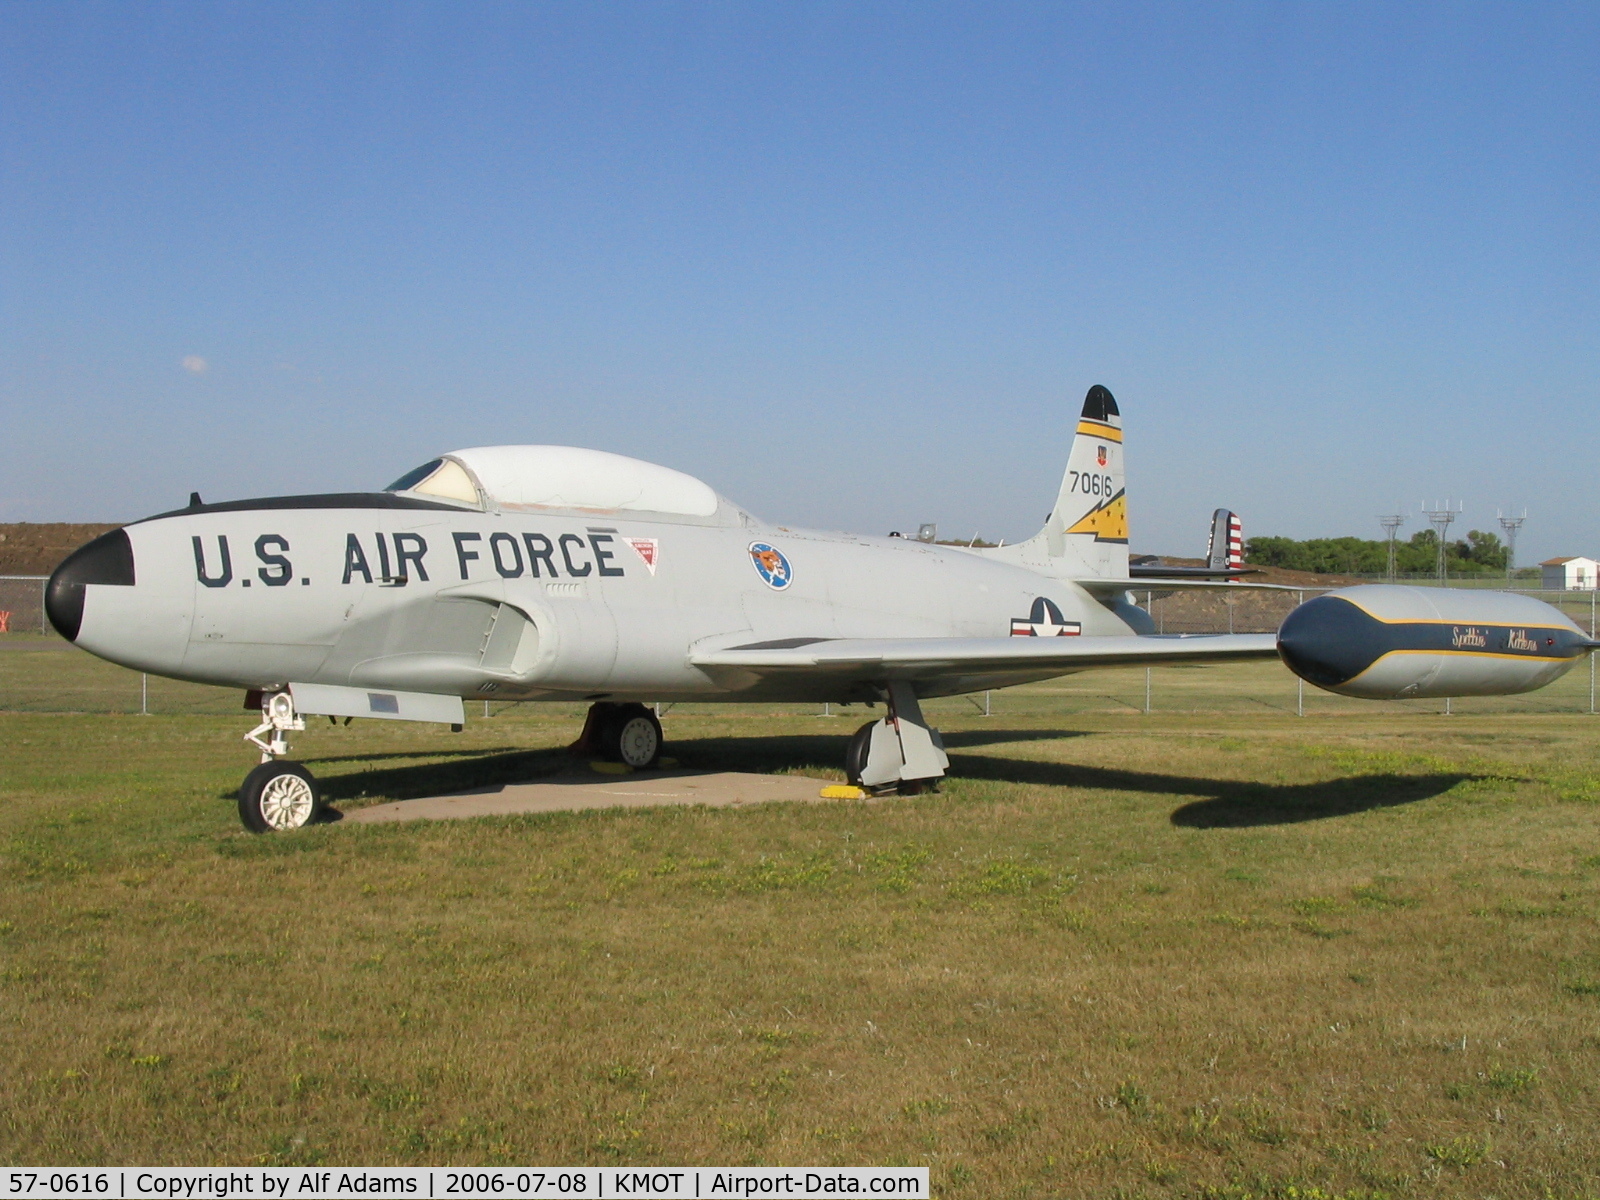 57-0616, 1957 Lockheed T-33A Shooting Star C/N 580-1265, Displayed at the Dakota Territory Air Museum in 2006.